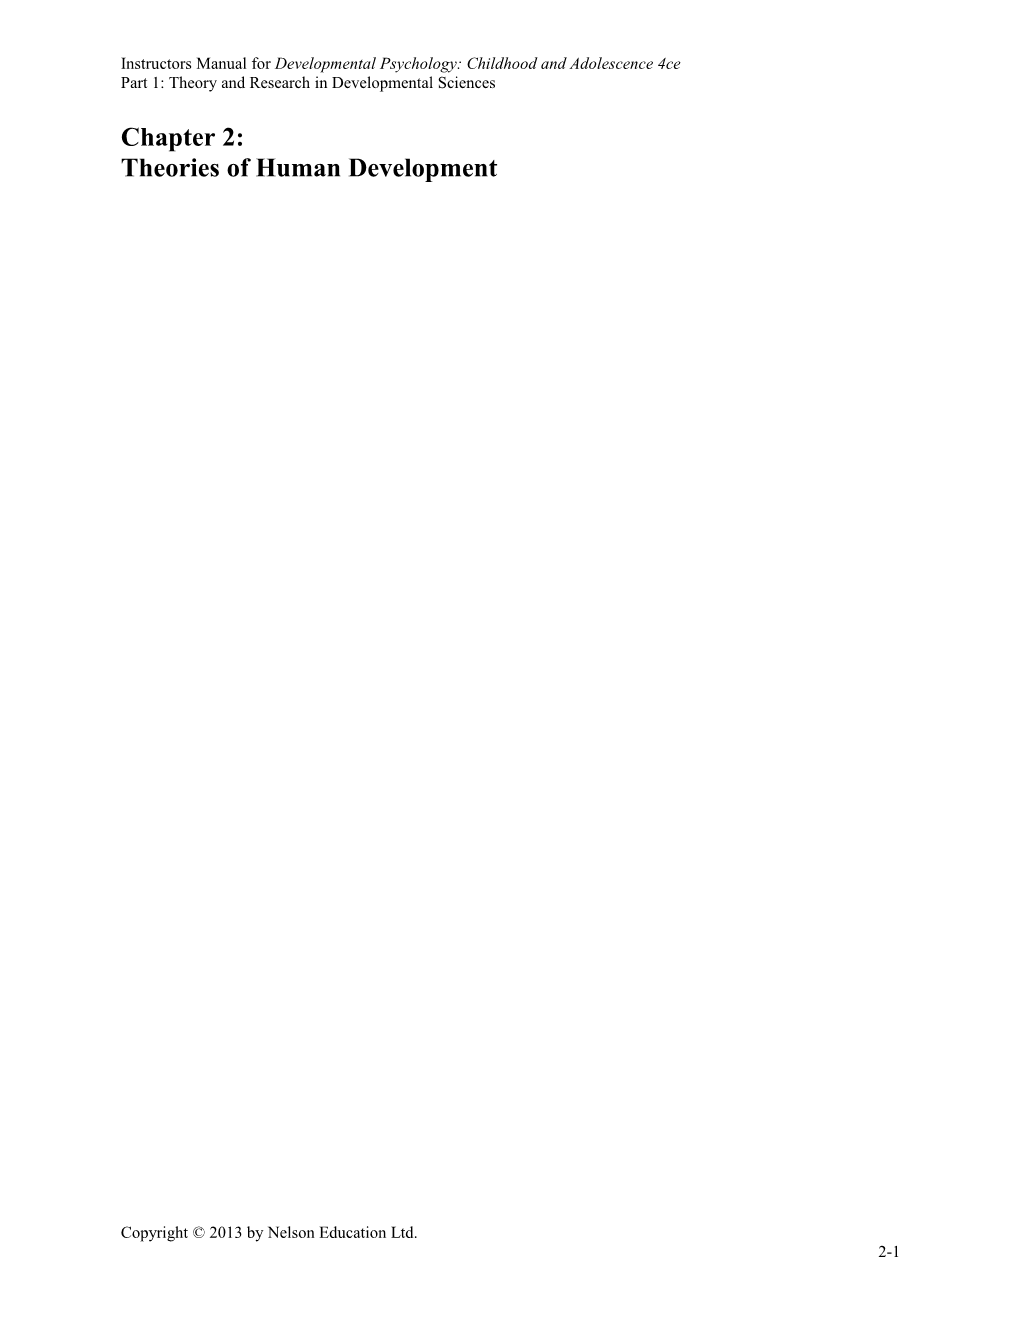 Chapter 2: Theories of Human Development